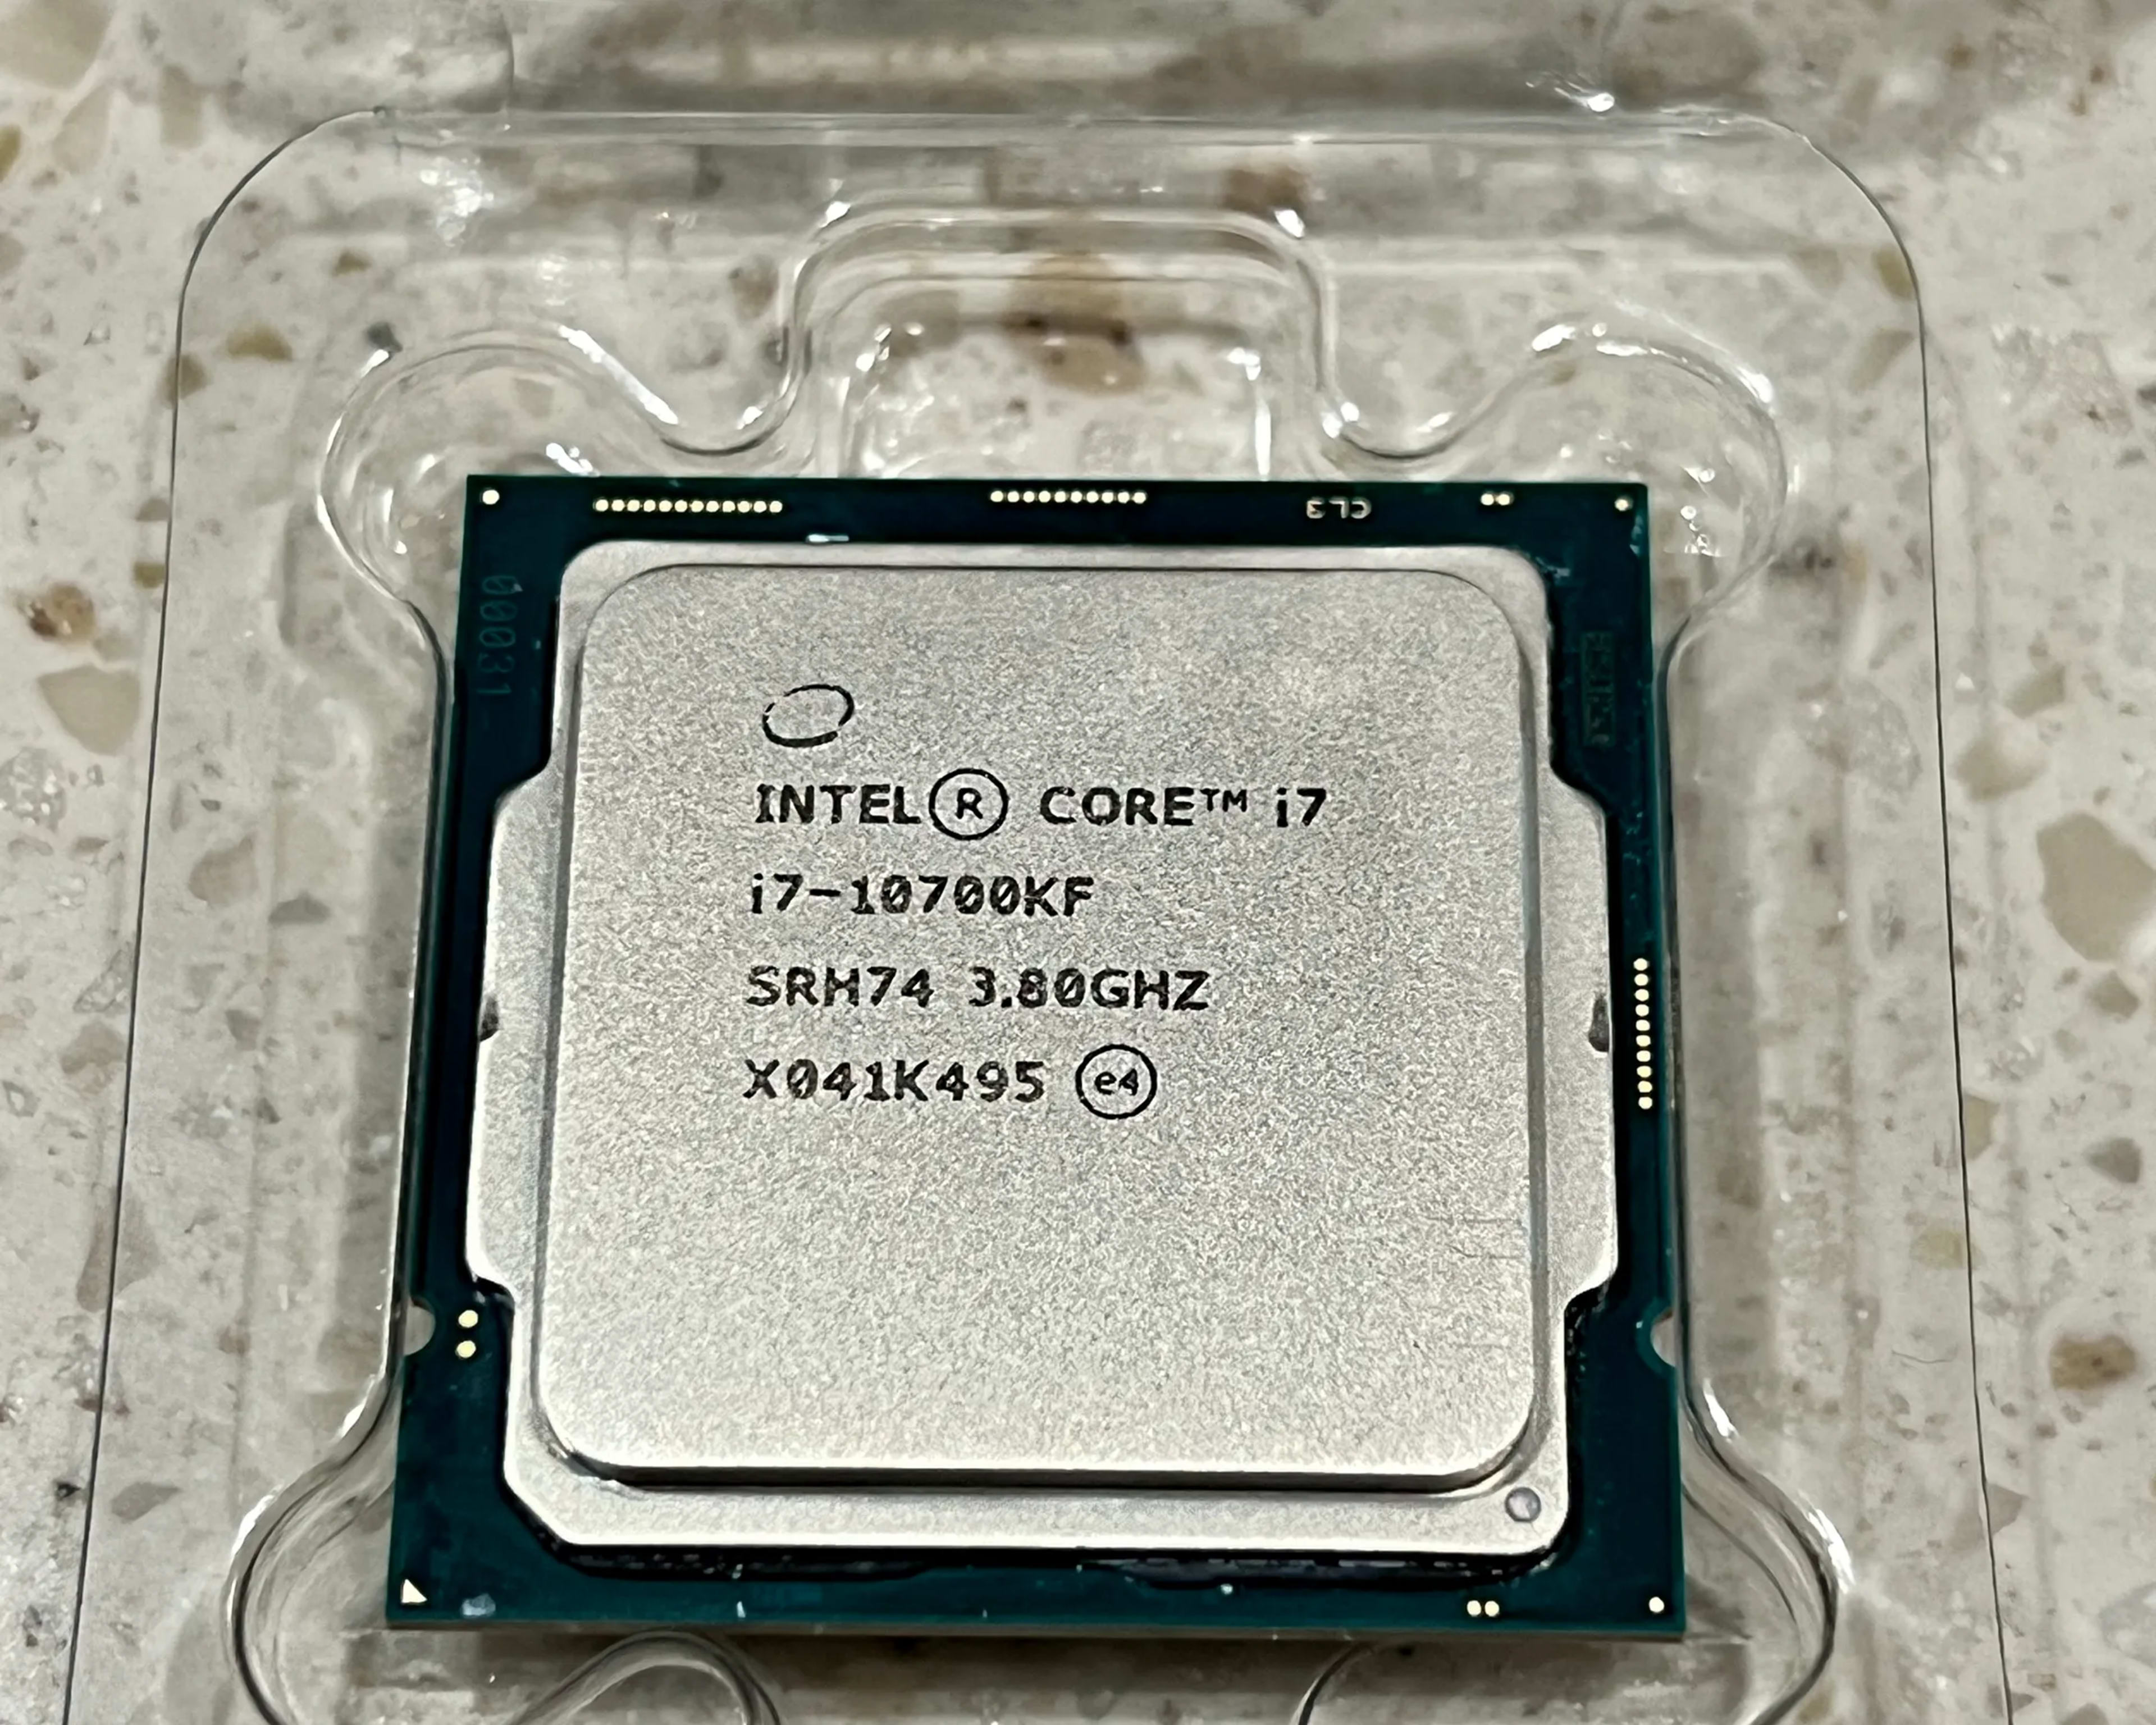 Intel® Core™ i7-10700KF Processor - works perfectly